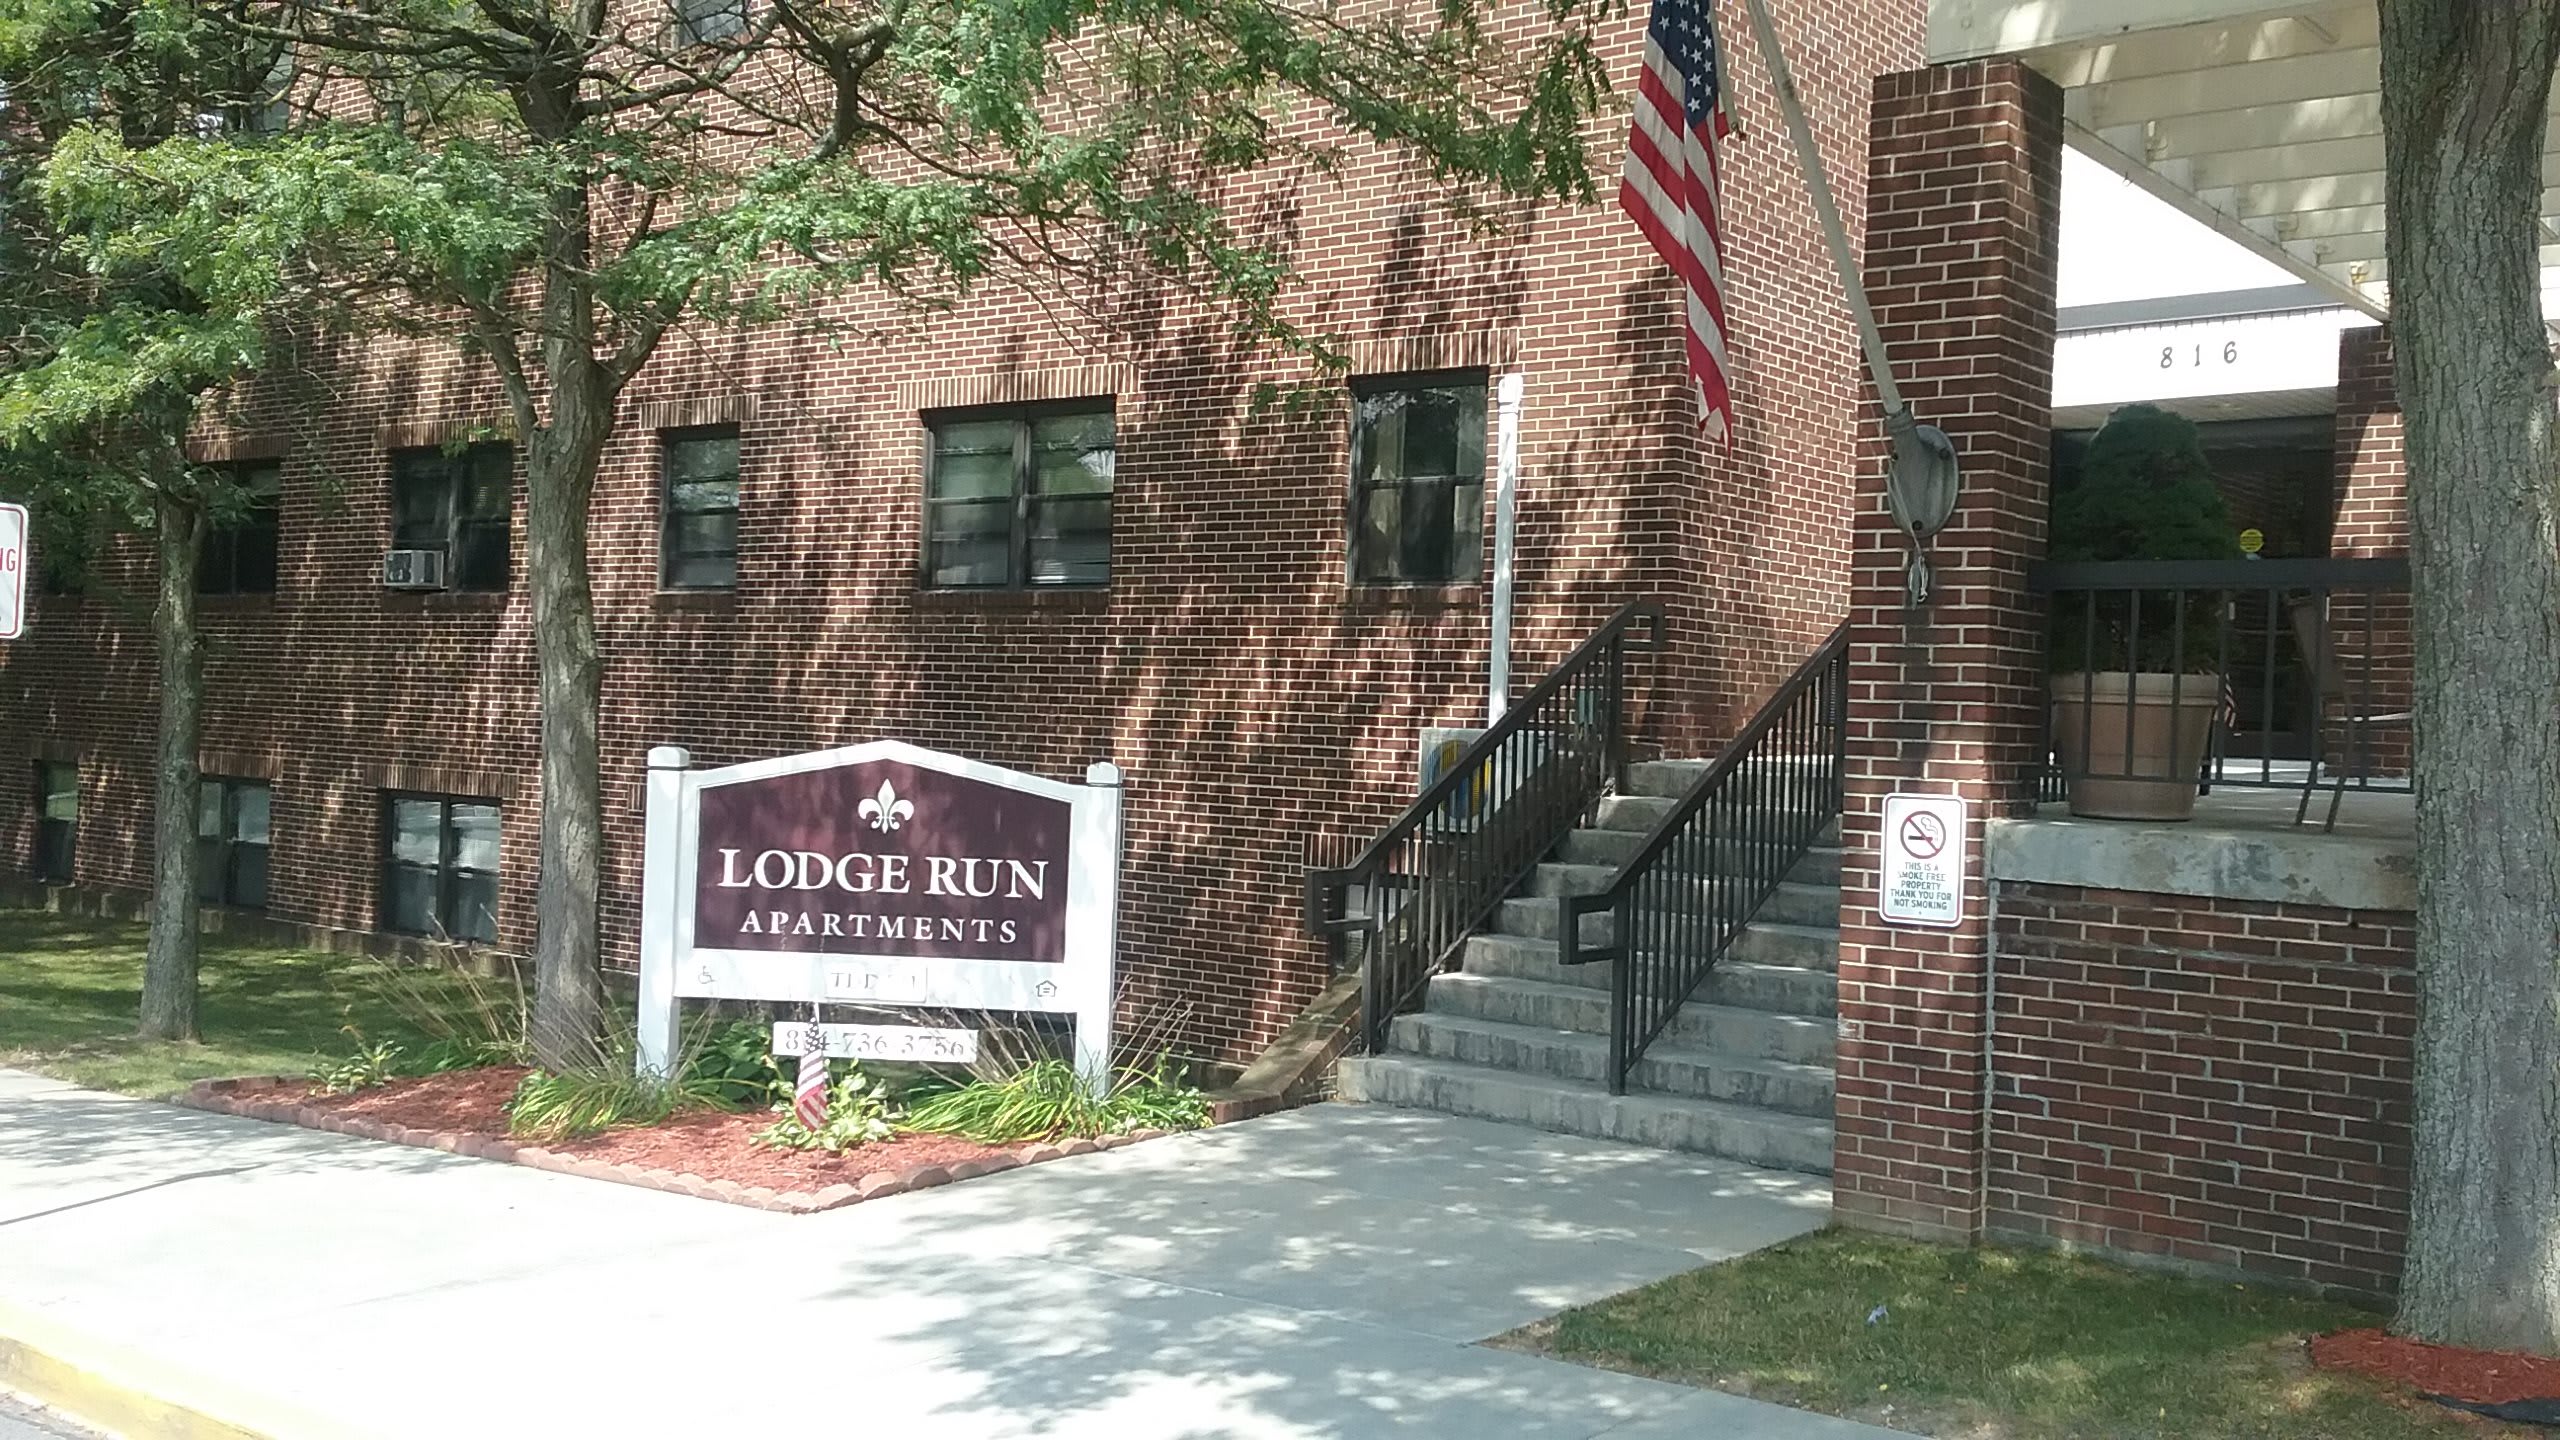 Lodge Run Apartments